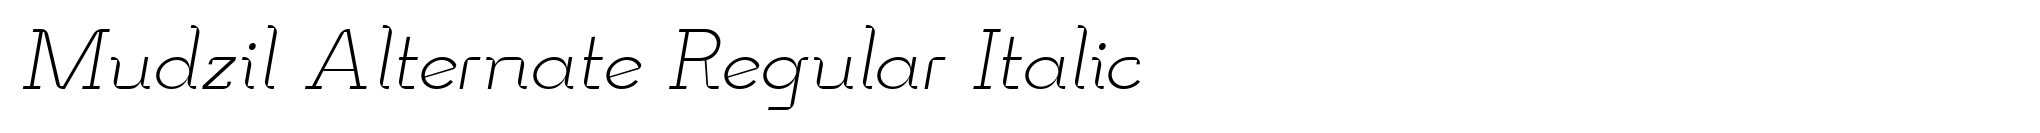 Mudzil Alternate Regular Italic image